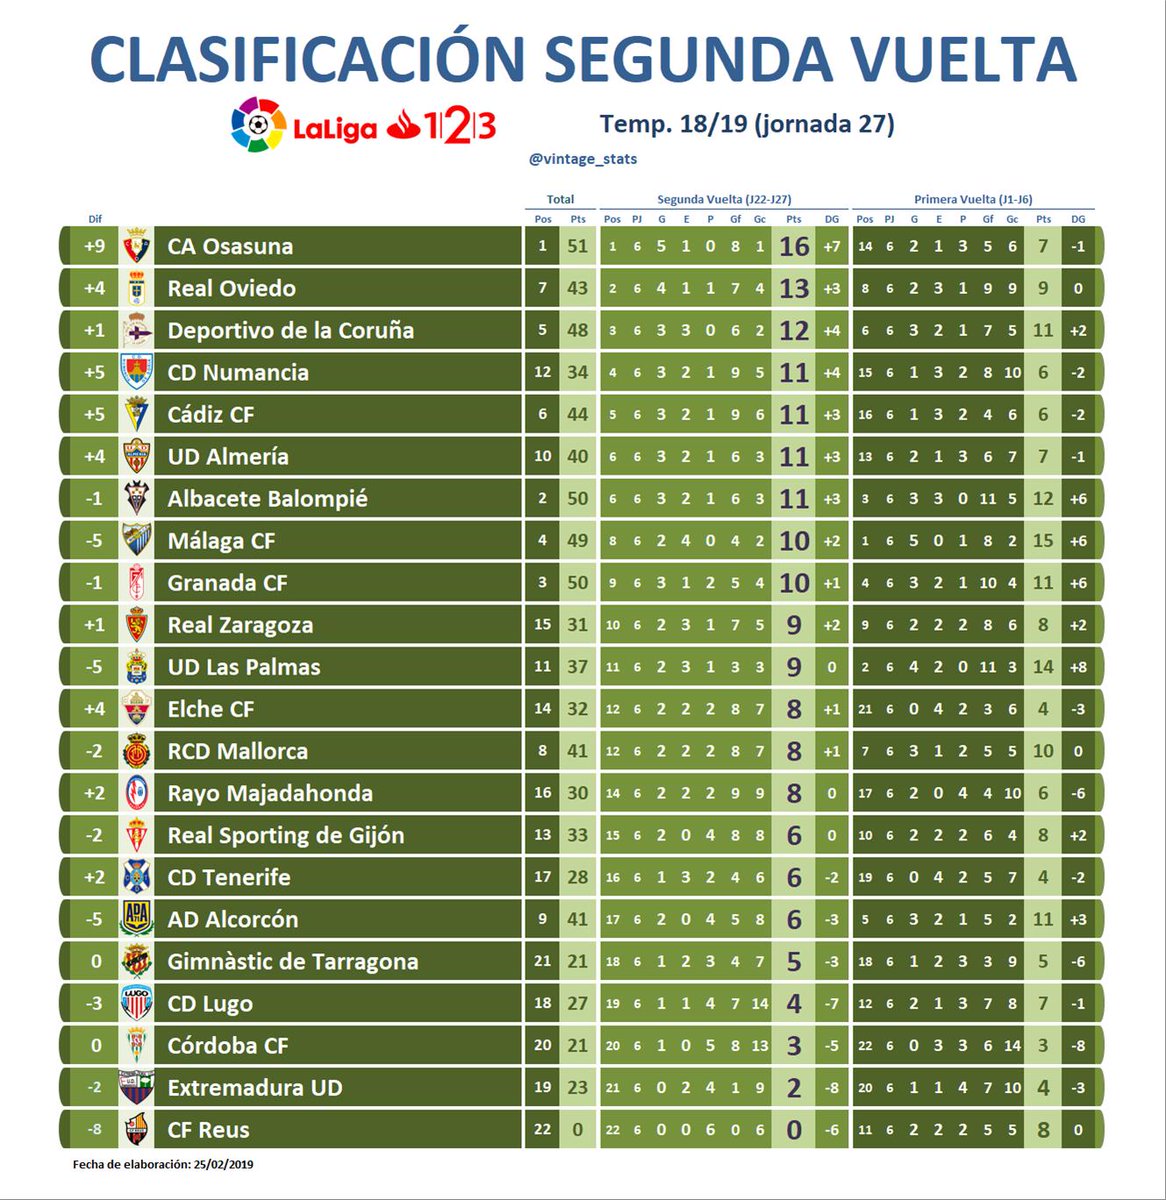 vintage_stats on Twitter: "📊 #Ranking Temp. 18/19 #LaLiga123 J27 🔸 Clasificación 2ª Vuelta Segunda División [16] @CAOsasuna puntos) [13] @RealOviedo (+4) [12] @RCDeportivo (+1) [11] @cdnumancia (+5) [11] @Cadiz_CF (+5) [11] @U_D_Almeria (+4 ...